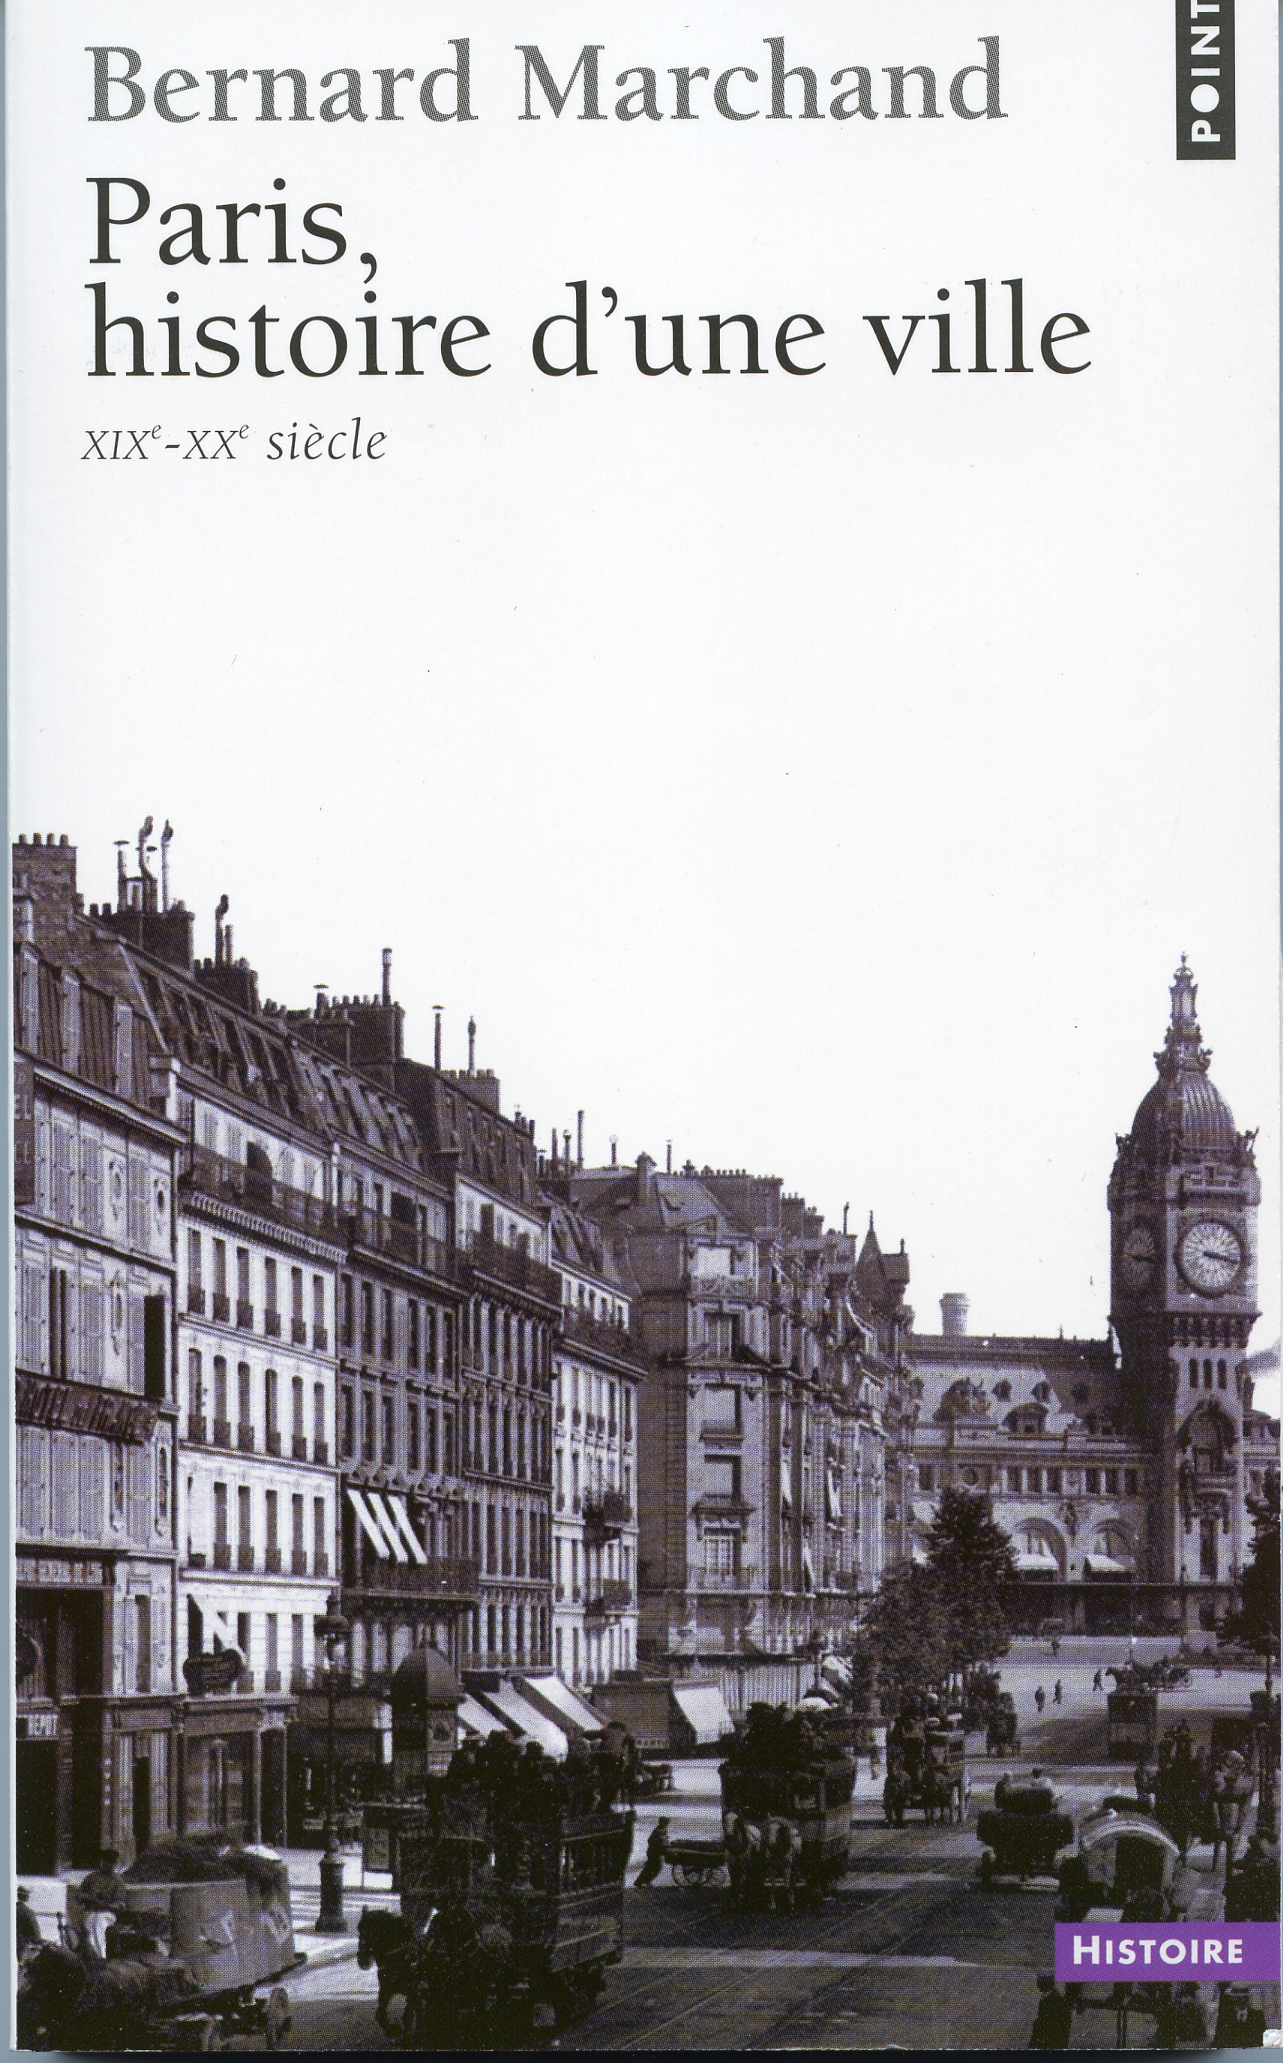 Histoire de Paris, Urbanisme